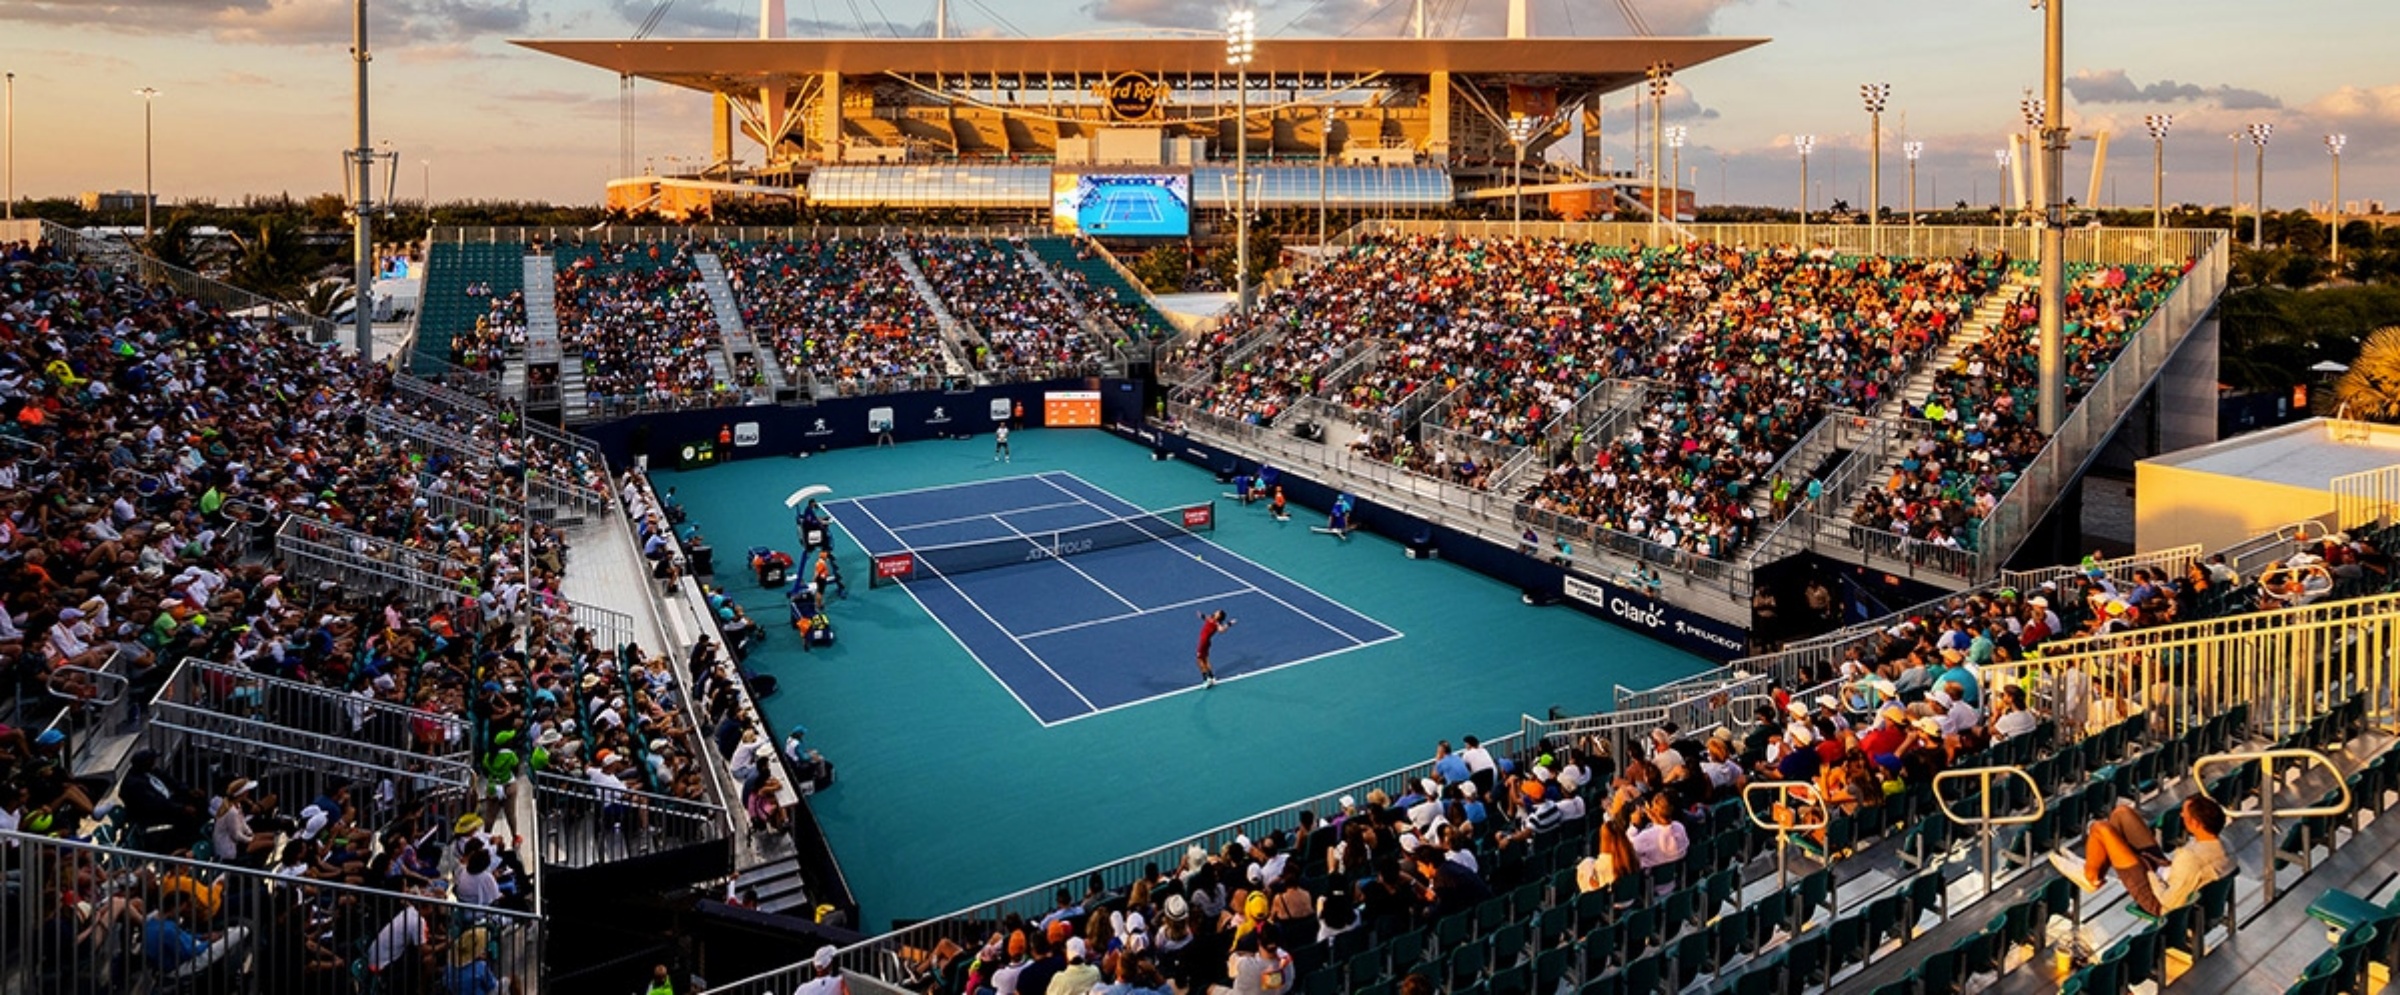 Miami Open Tennis Schedule | eSeats.com